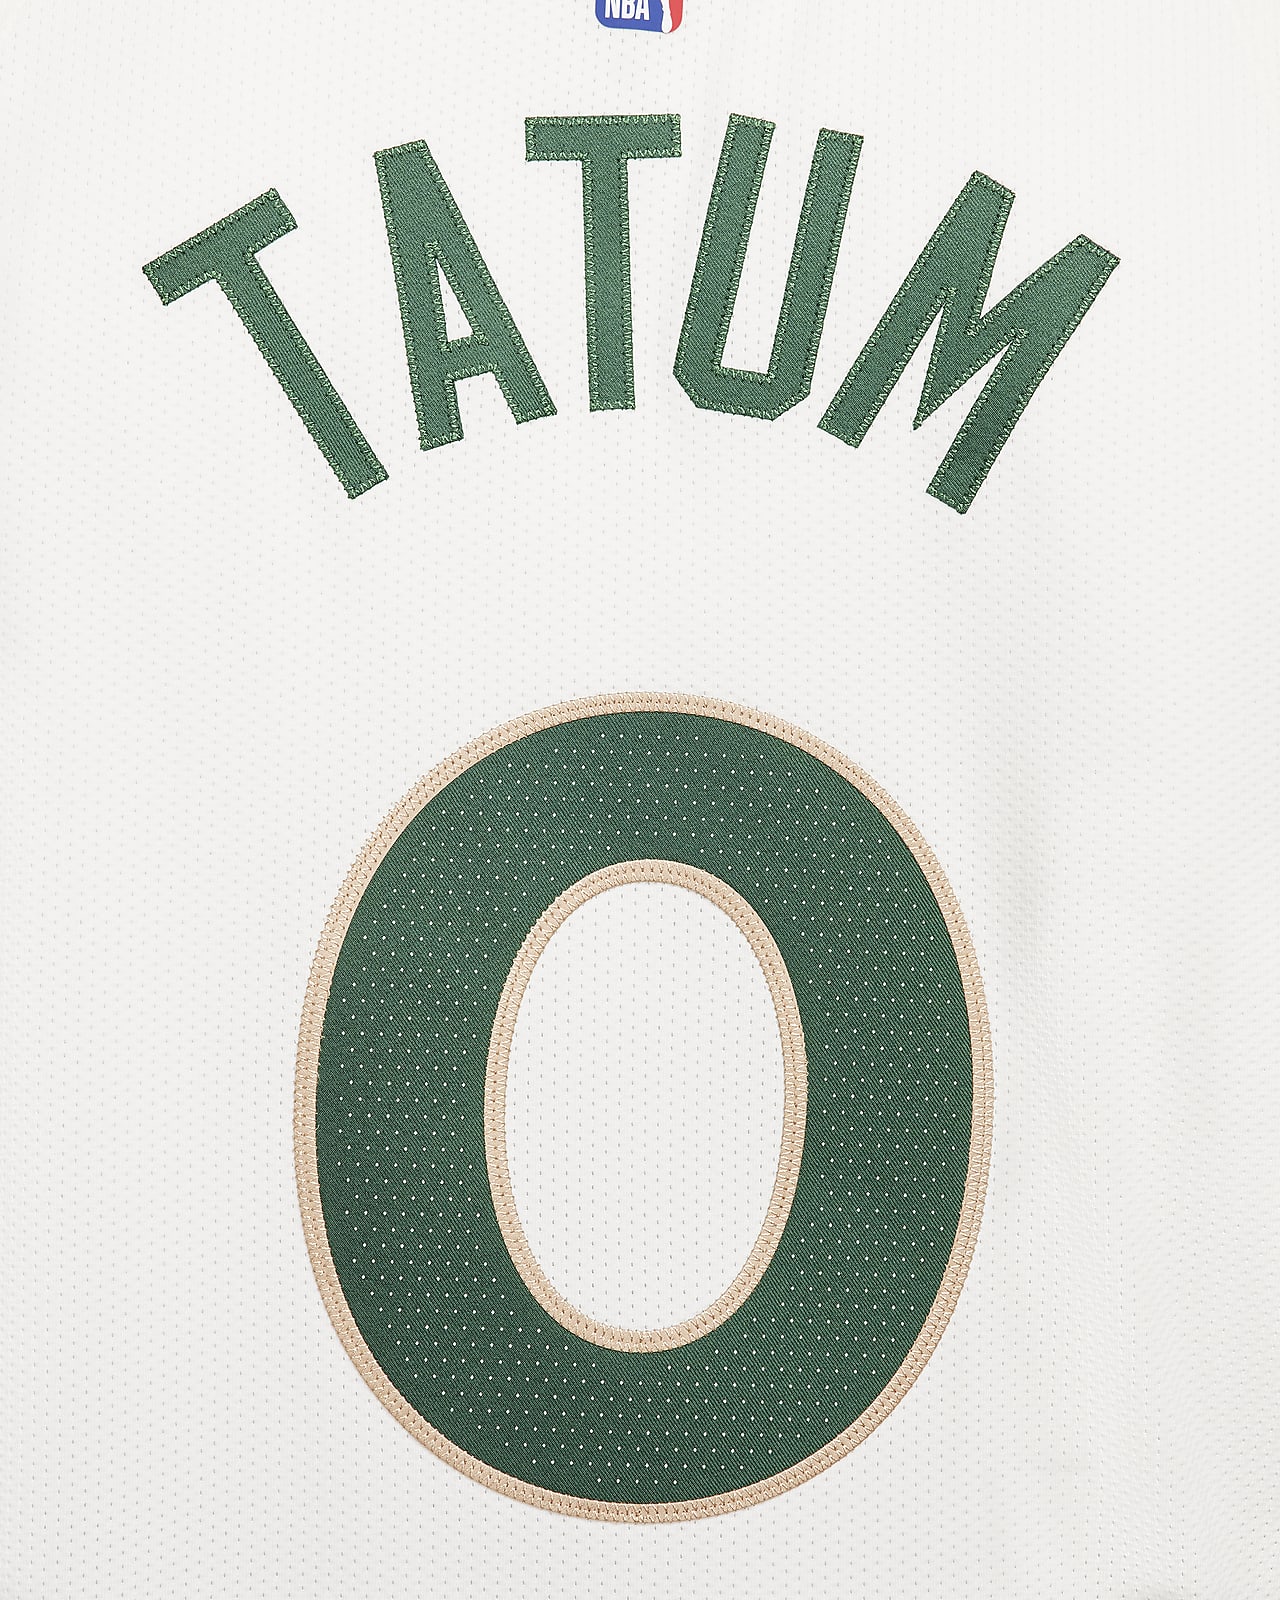 Jaylen Brown Boston Celtics City Edition 2023/24 Men's Nike Dri-FIT NBA  Swingman Jersey.